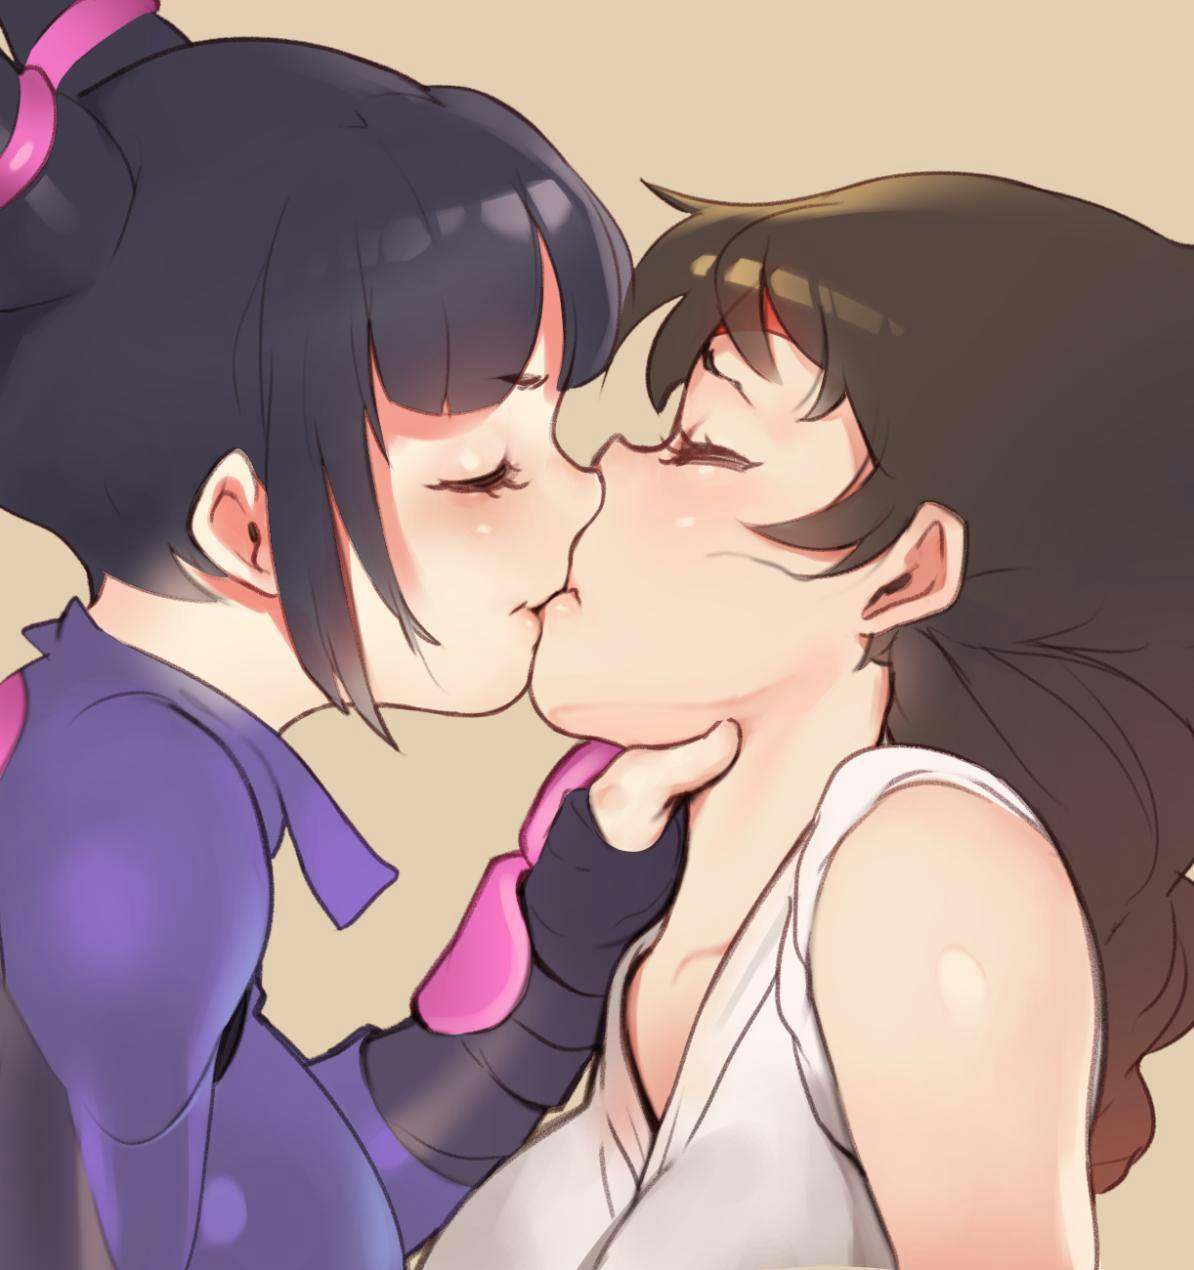 Anime Yuri Lesbians Hentai - Lesbian Hentai: Best Yuri Hentai to Read and Stream Online